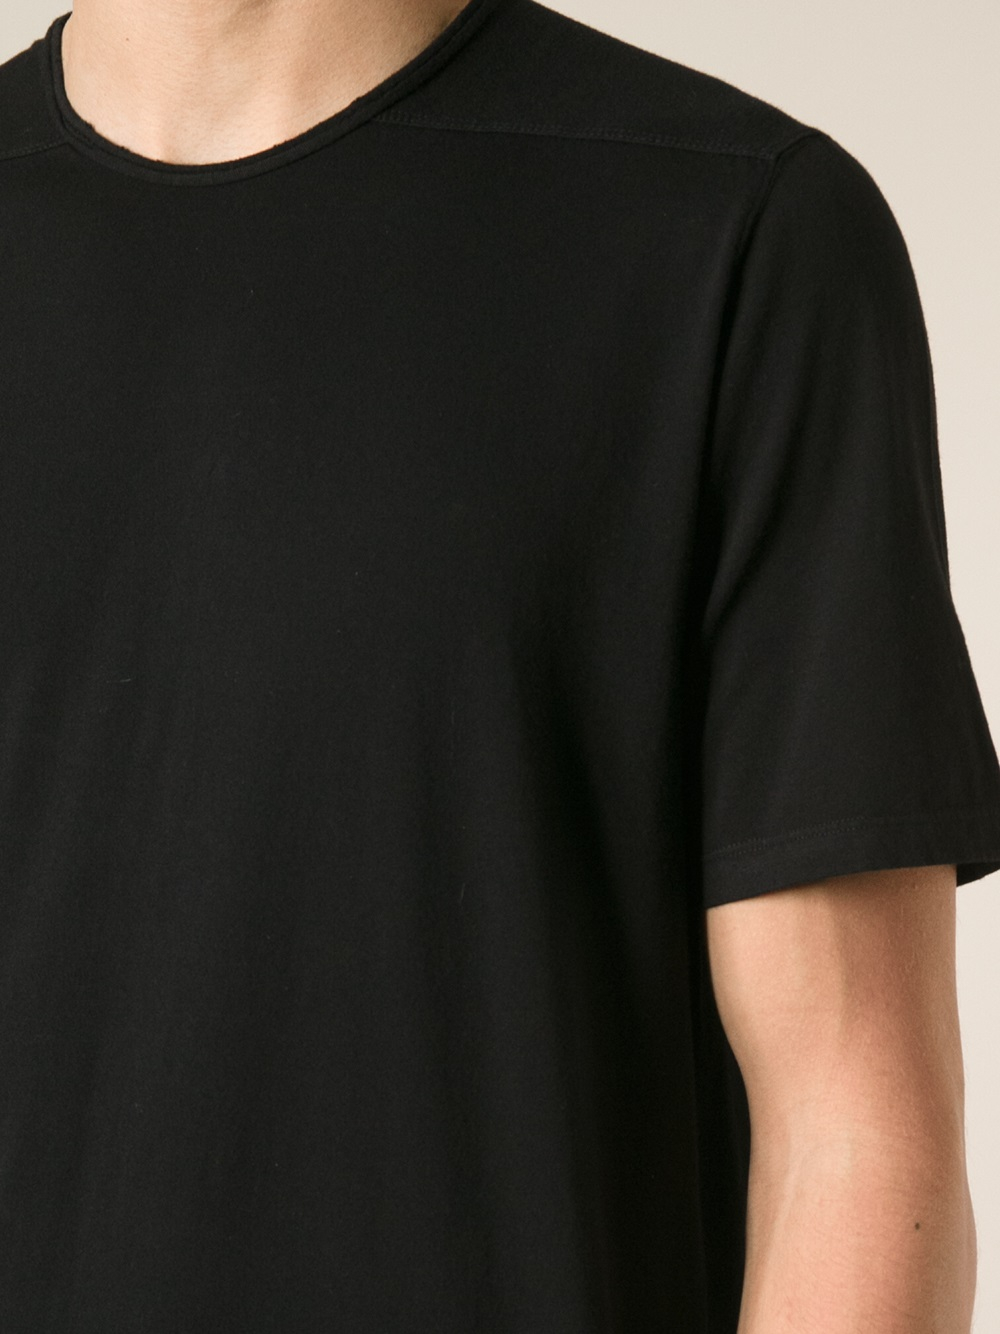 Lyst - Drkshdw By Rick Owens Oversized Tshirt in Black for Men